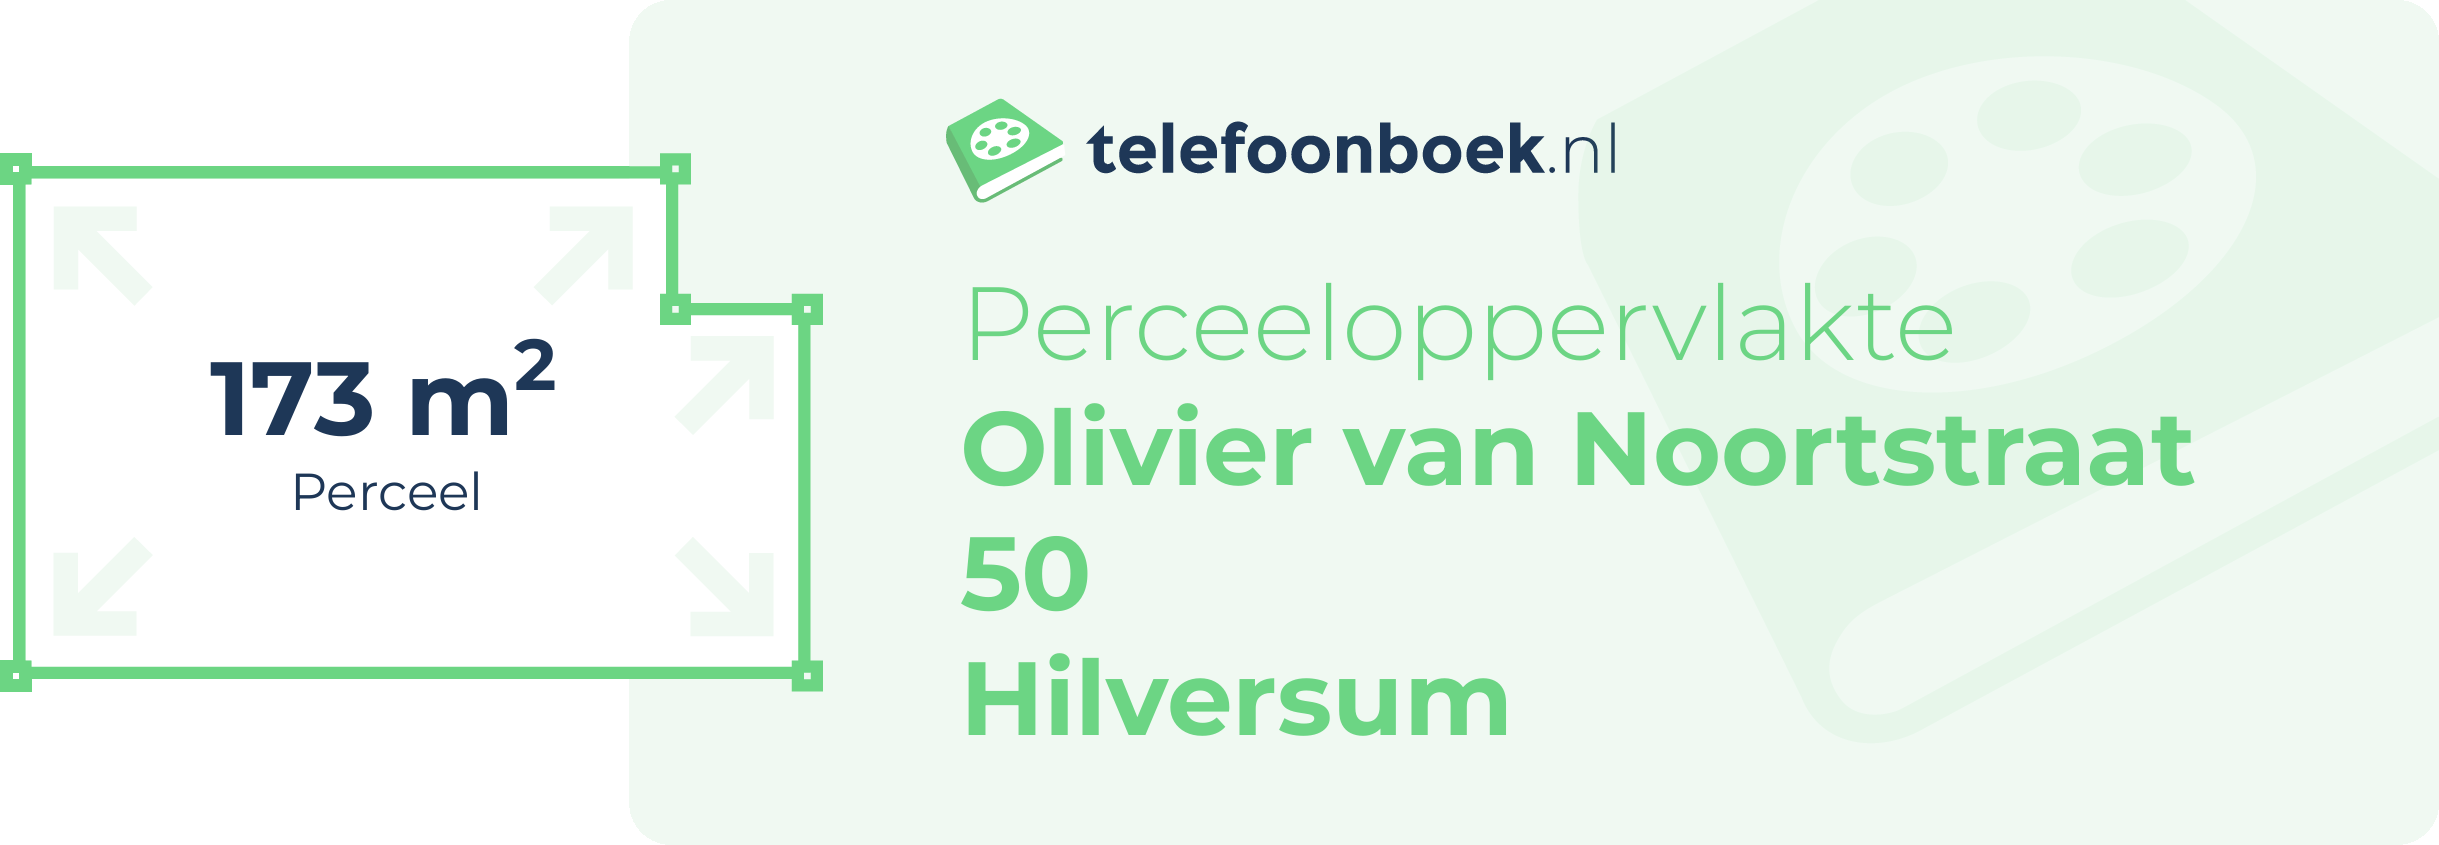 Perceeloppervlakte Olivier Van Noortstraat 50 Hilversum